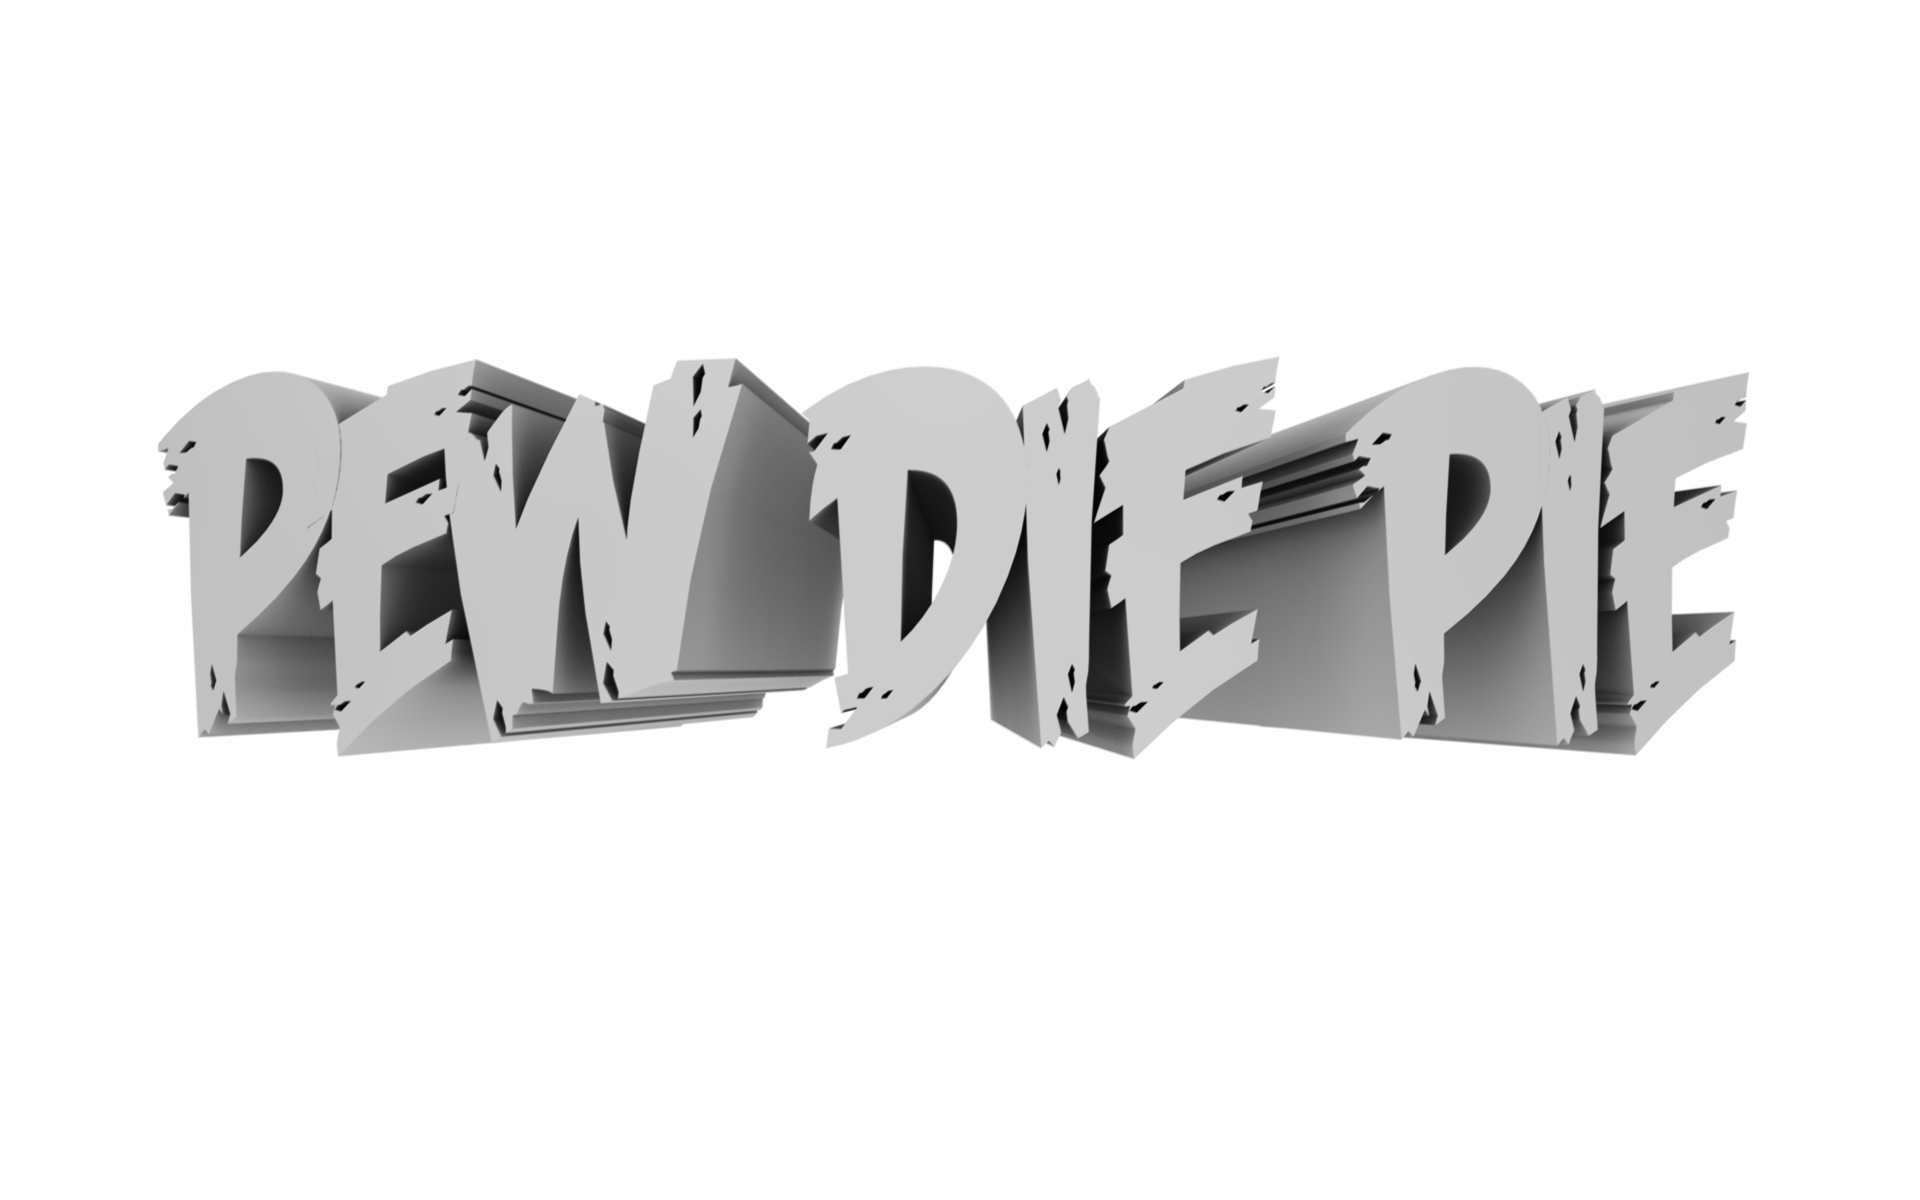 PewDiePie Black and White Logo - Pewdiepie HD wallpapers free download